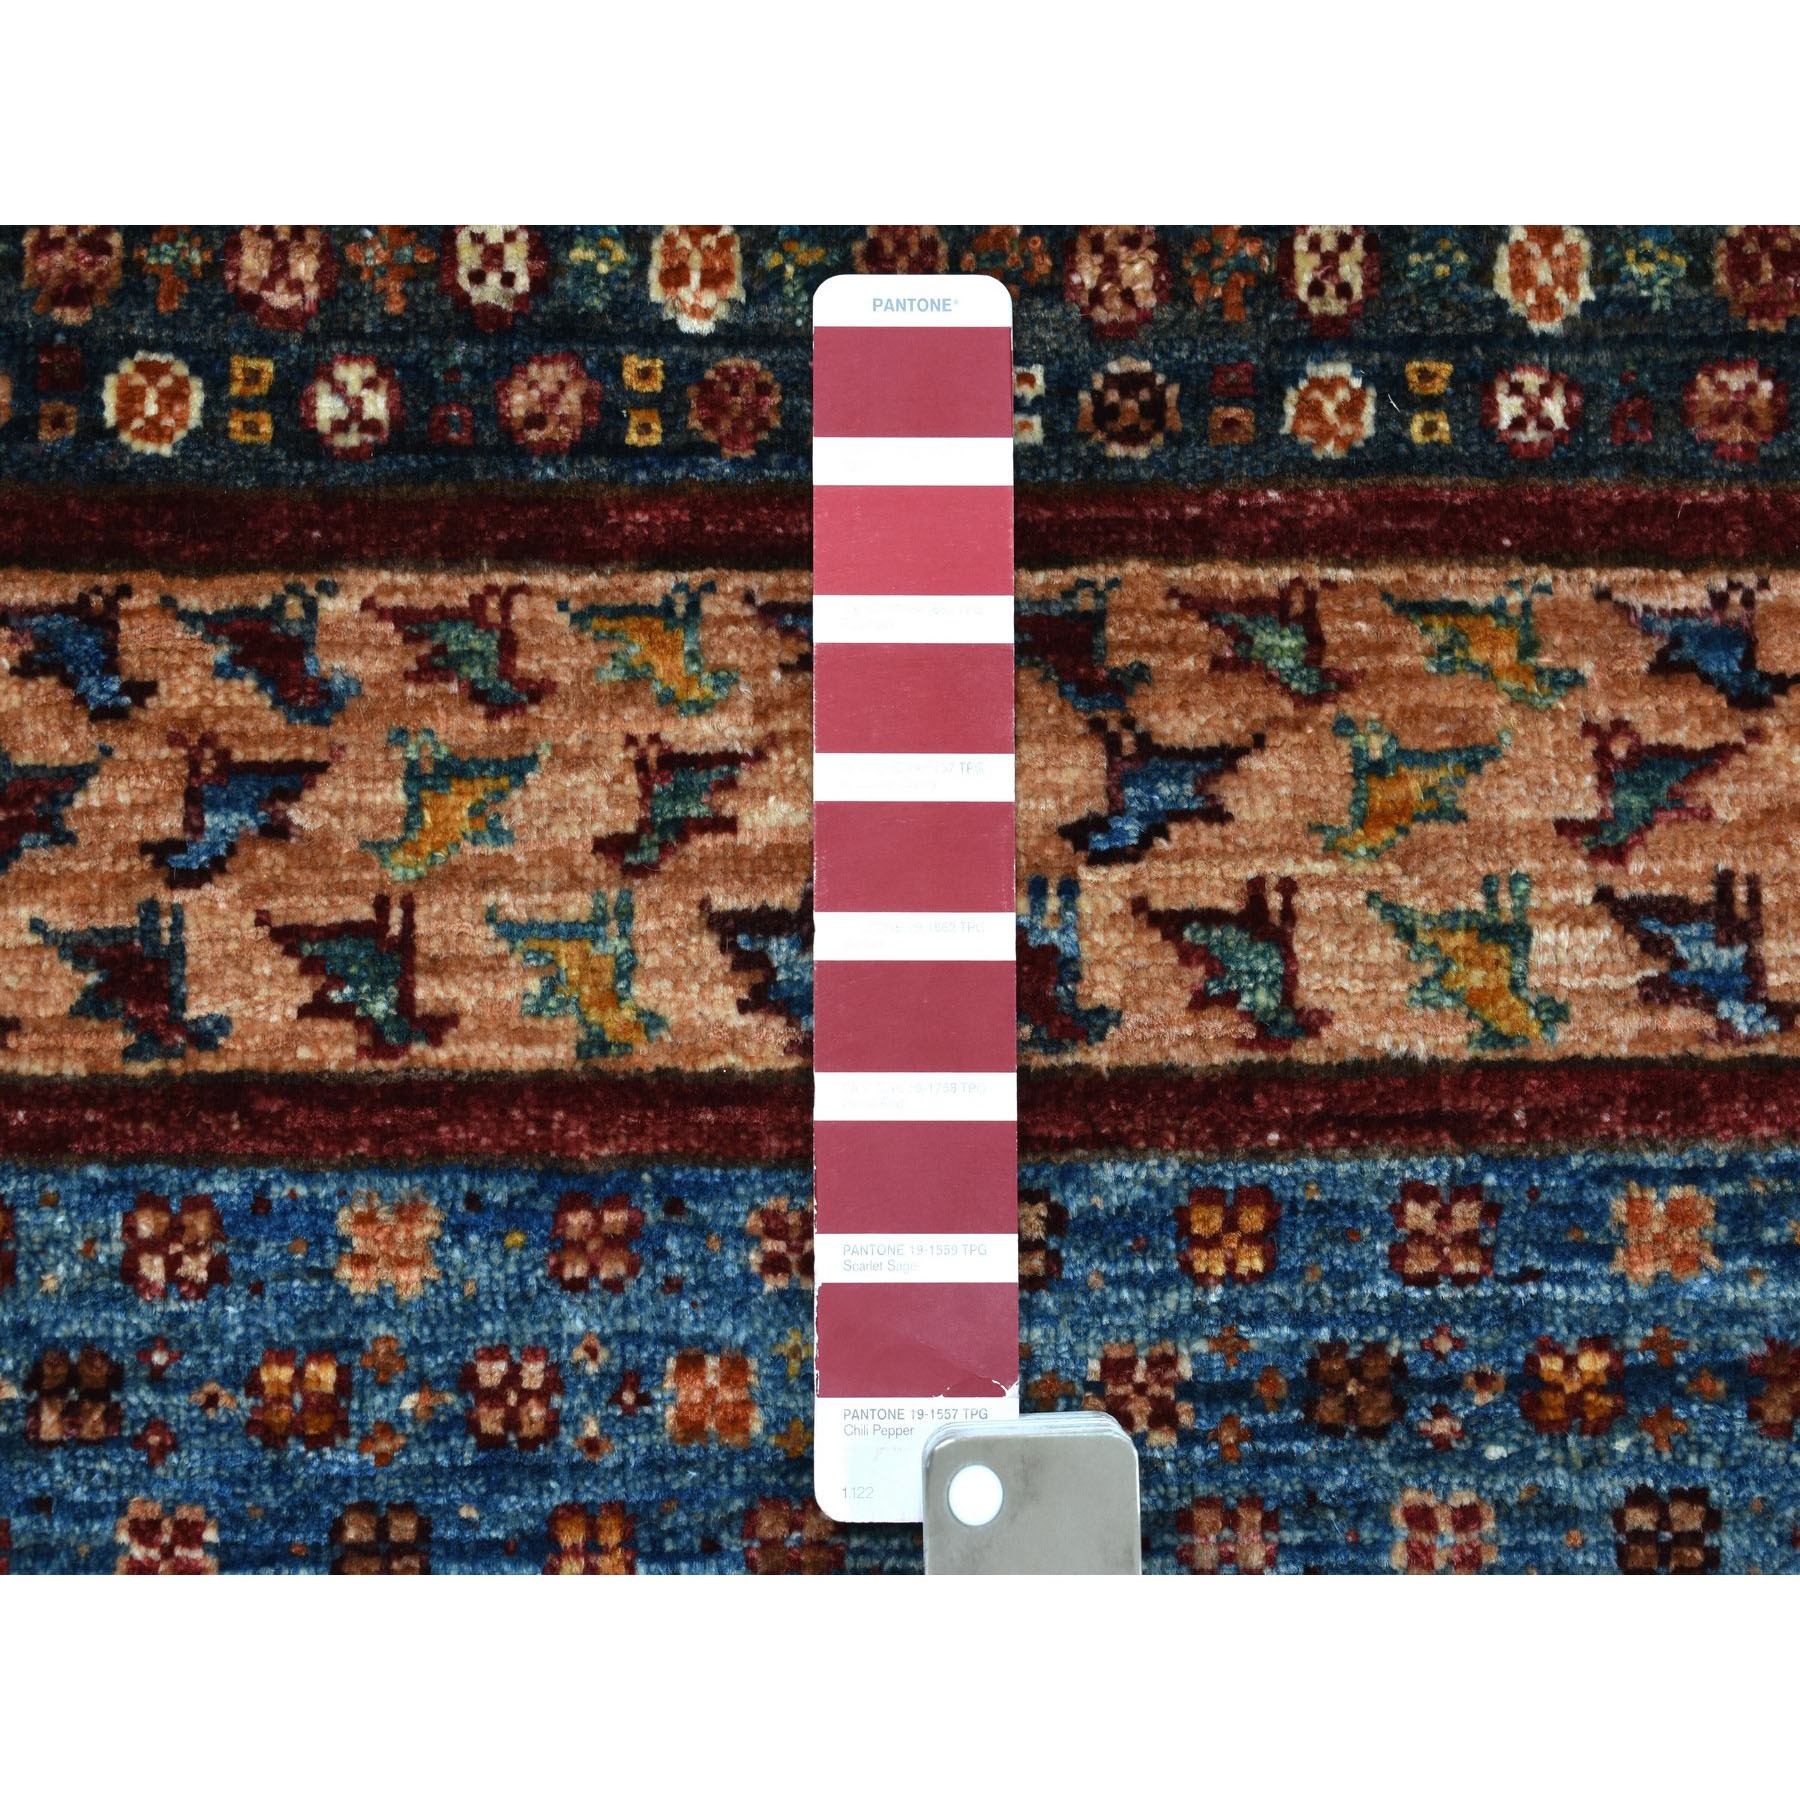 2-8 x4-1  Red Khorjin Design Super Kazak Camel Pure Wool Hand Knotted Oriental Rug 